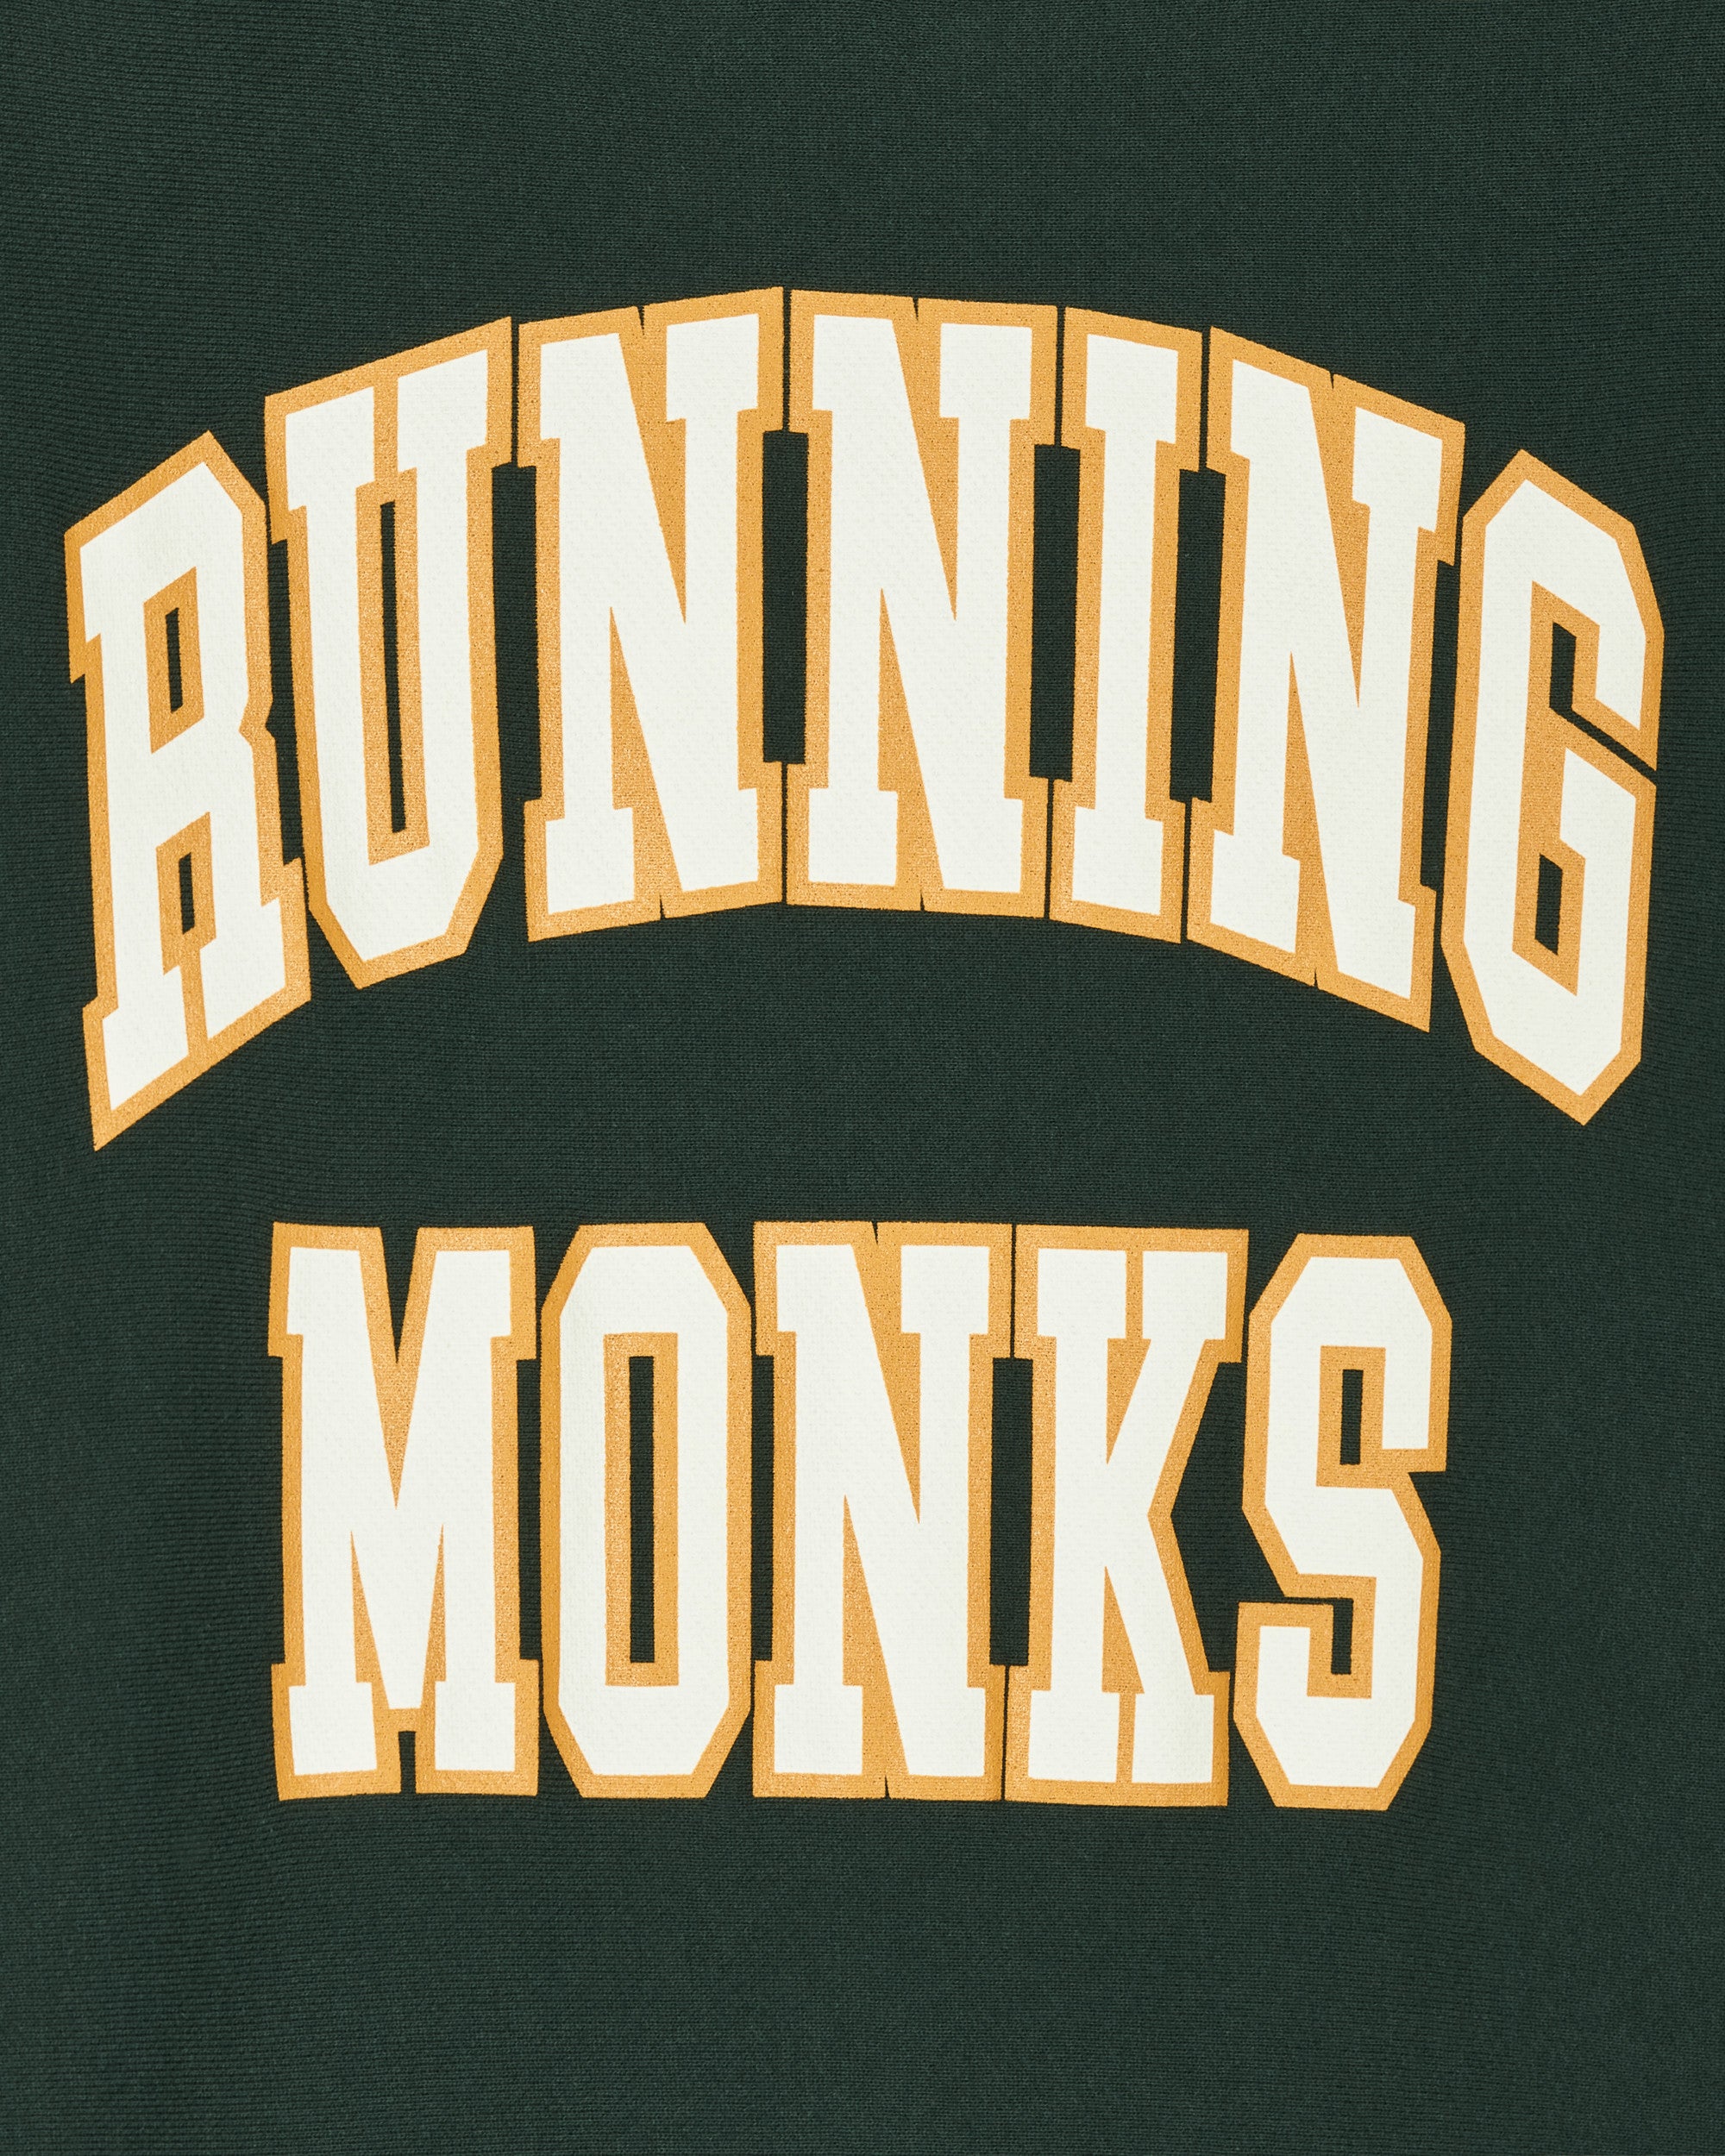 Undercover Running Monks T-Shirt Dark Green T-Shirts Shortsleeve UC2B4805  001